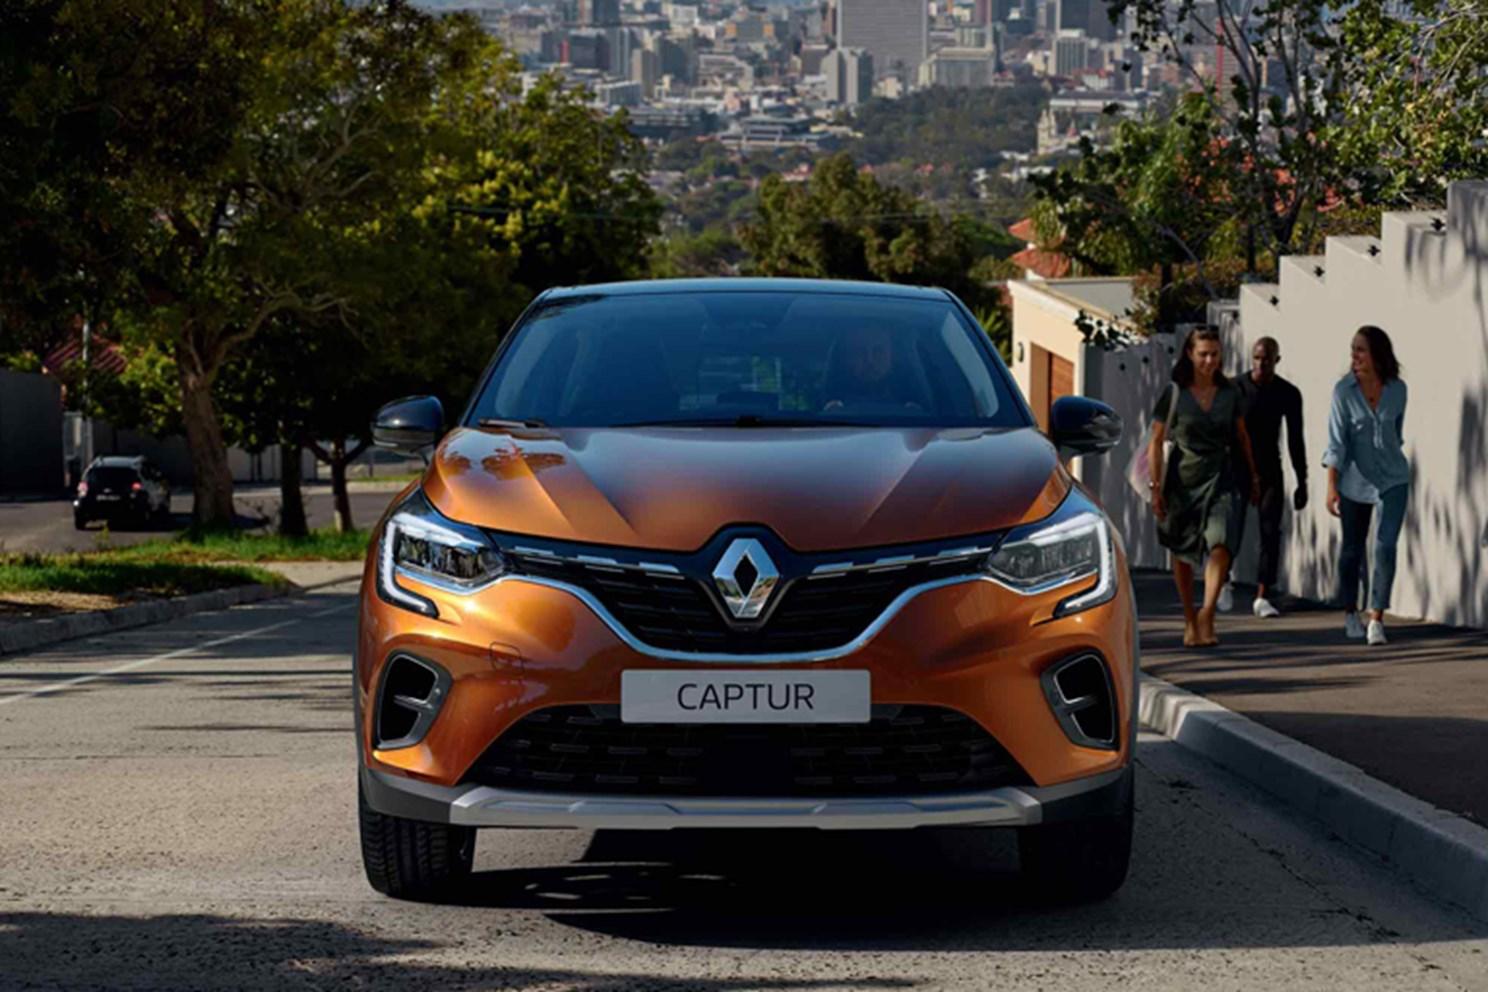 The All-new Renault CAPTUR: All new, still a CAPTUR - Site media